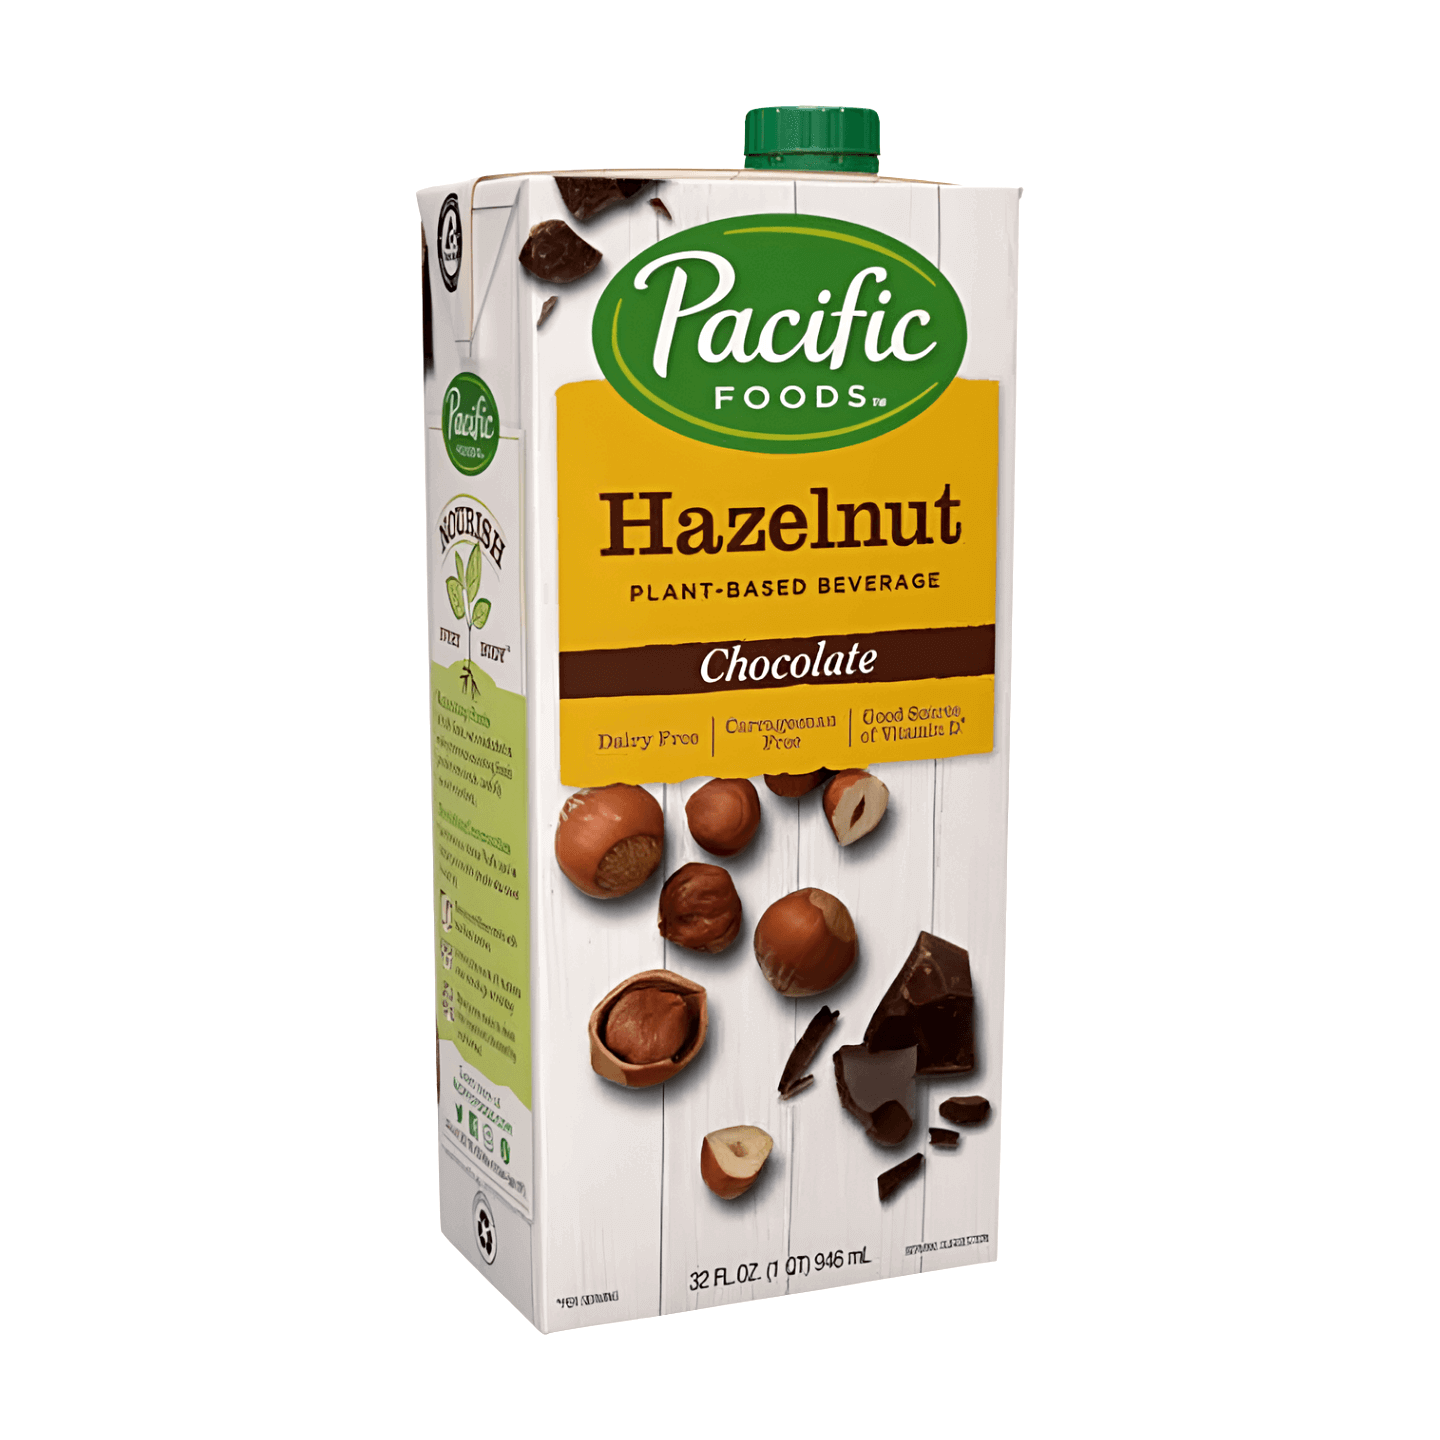 Pacific Foods Hazelnut Chocolate Plant Based Beverage